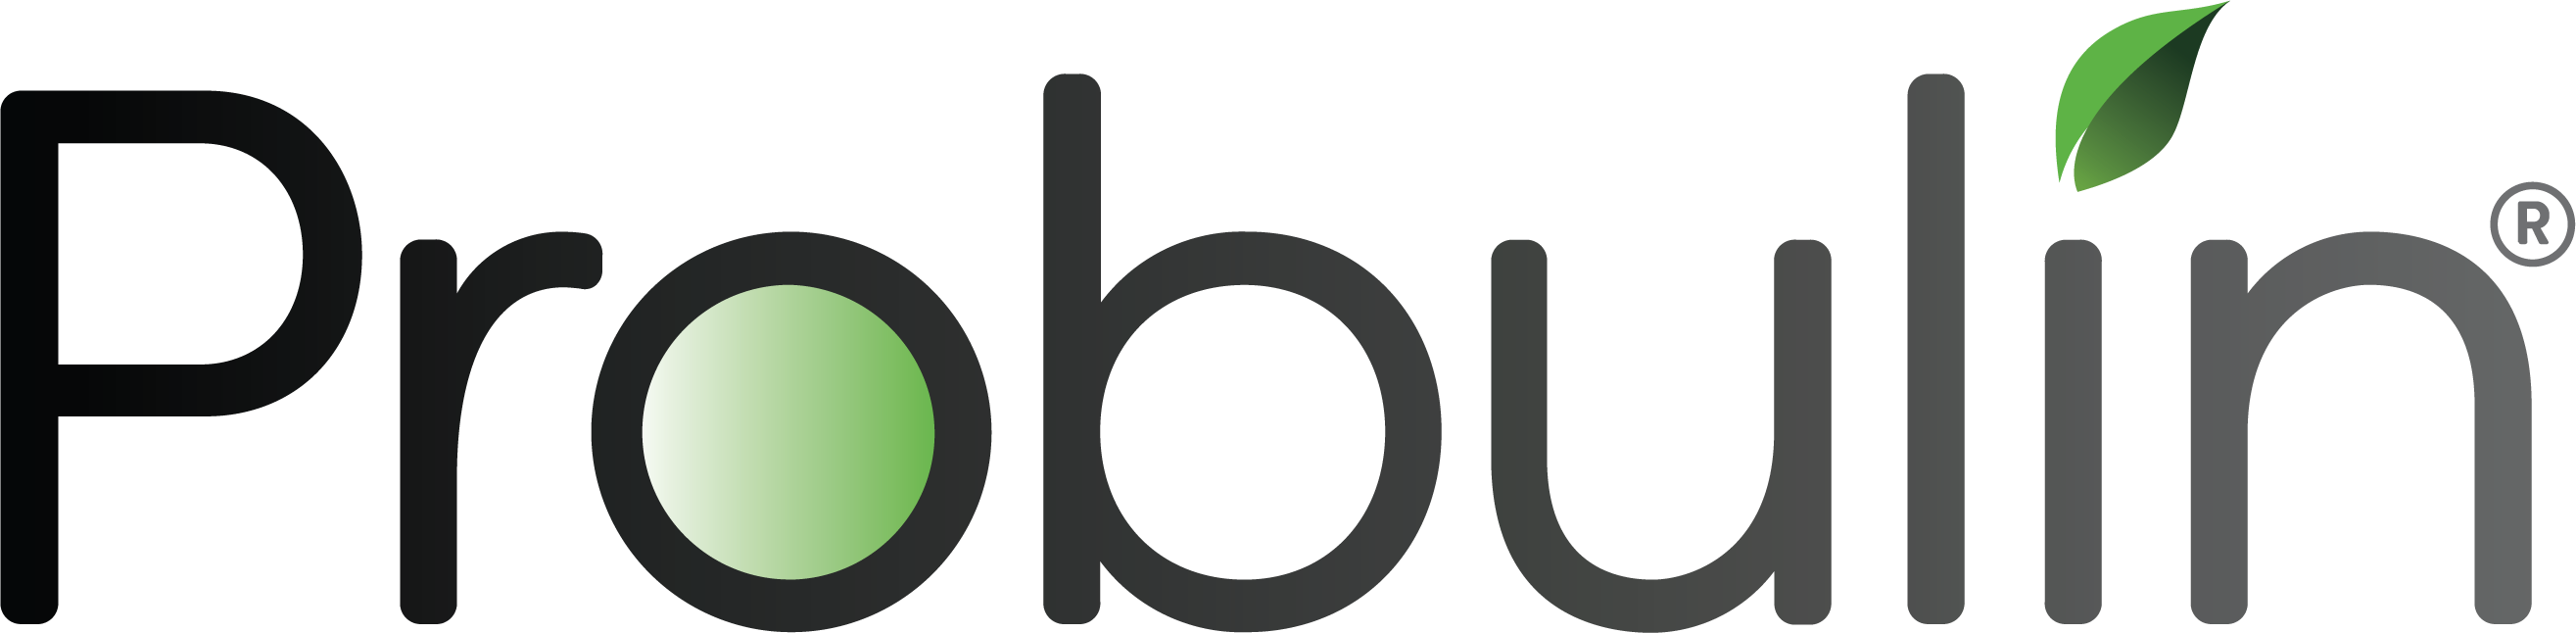 probulin logo